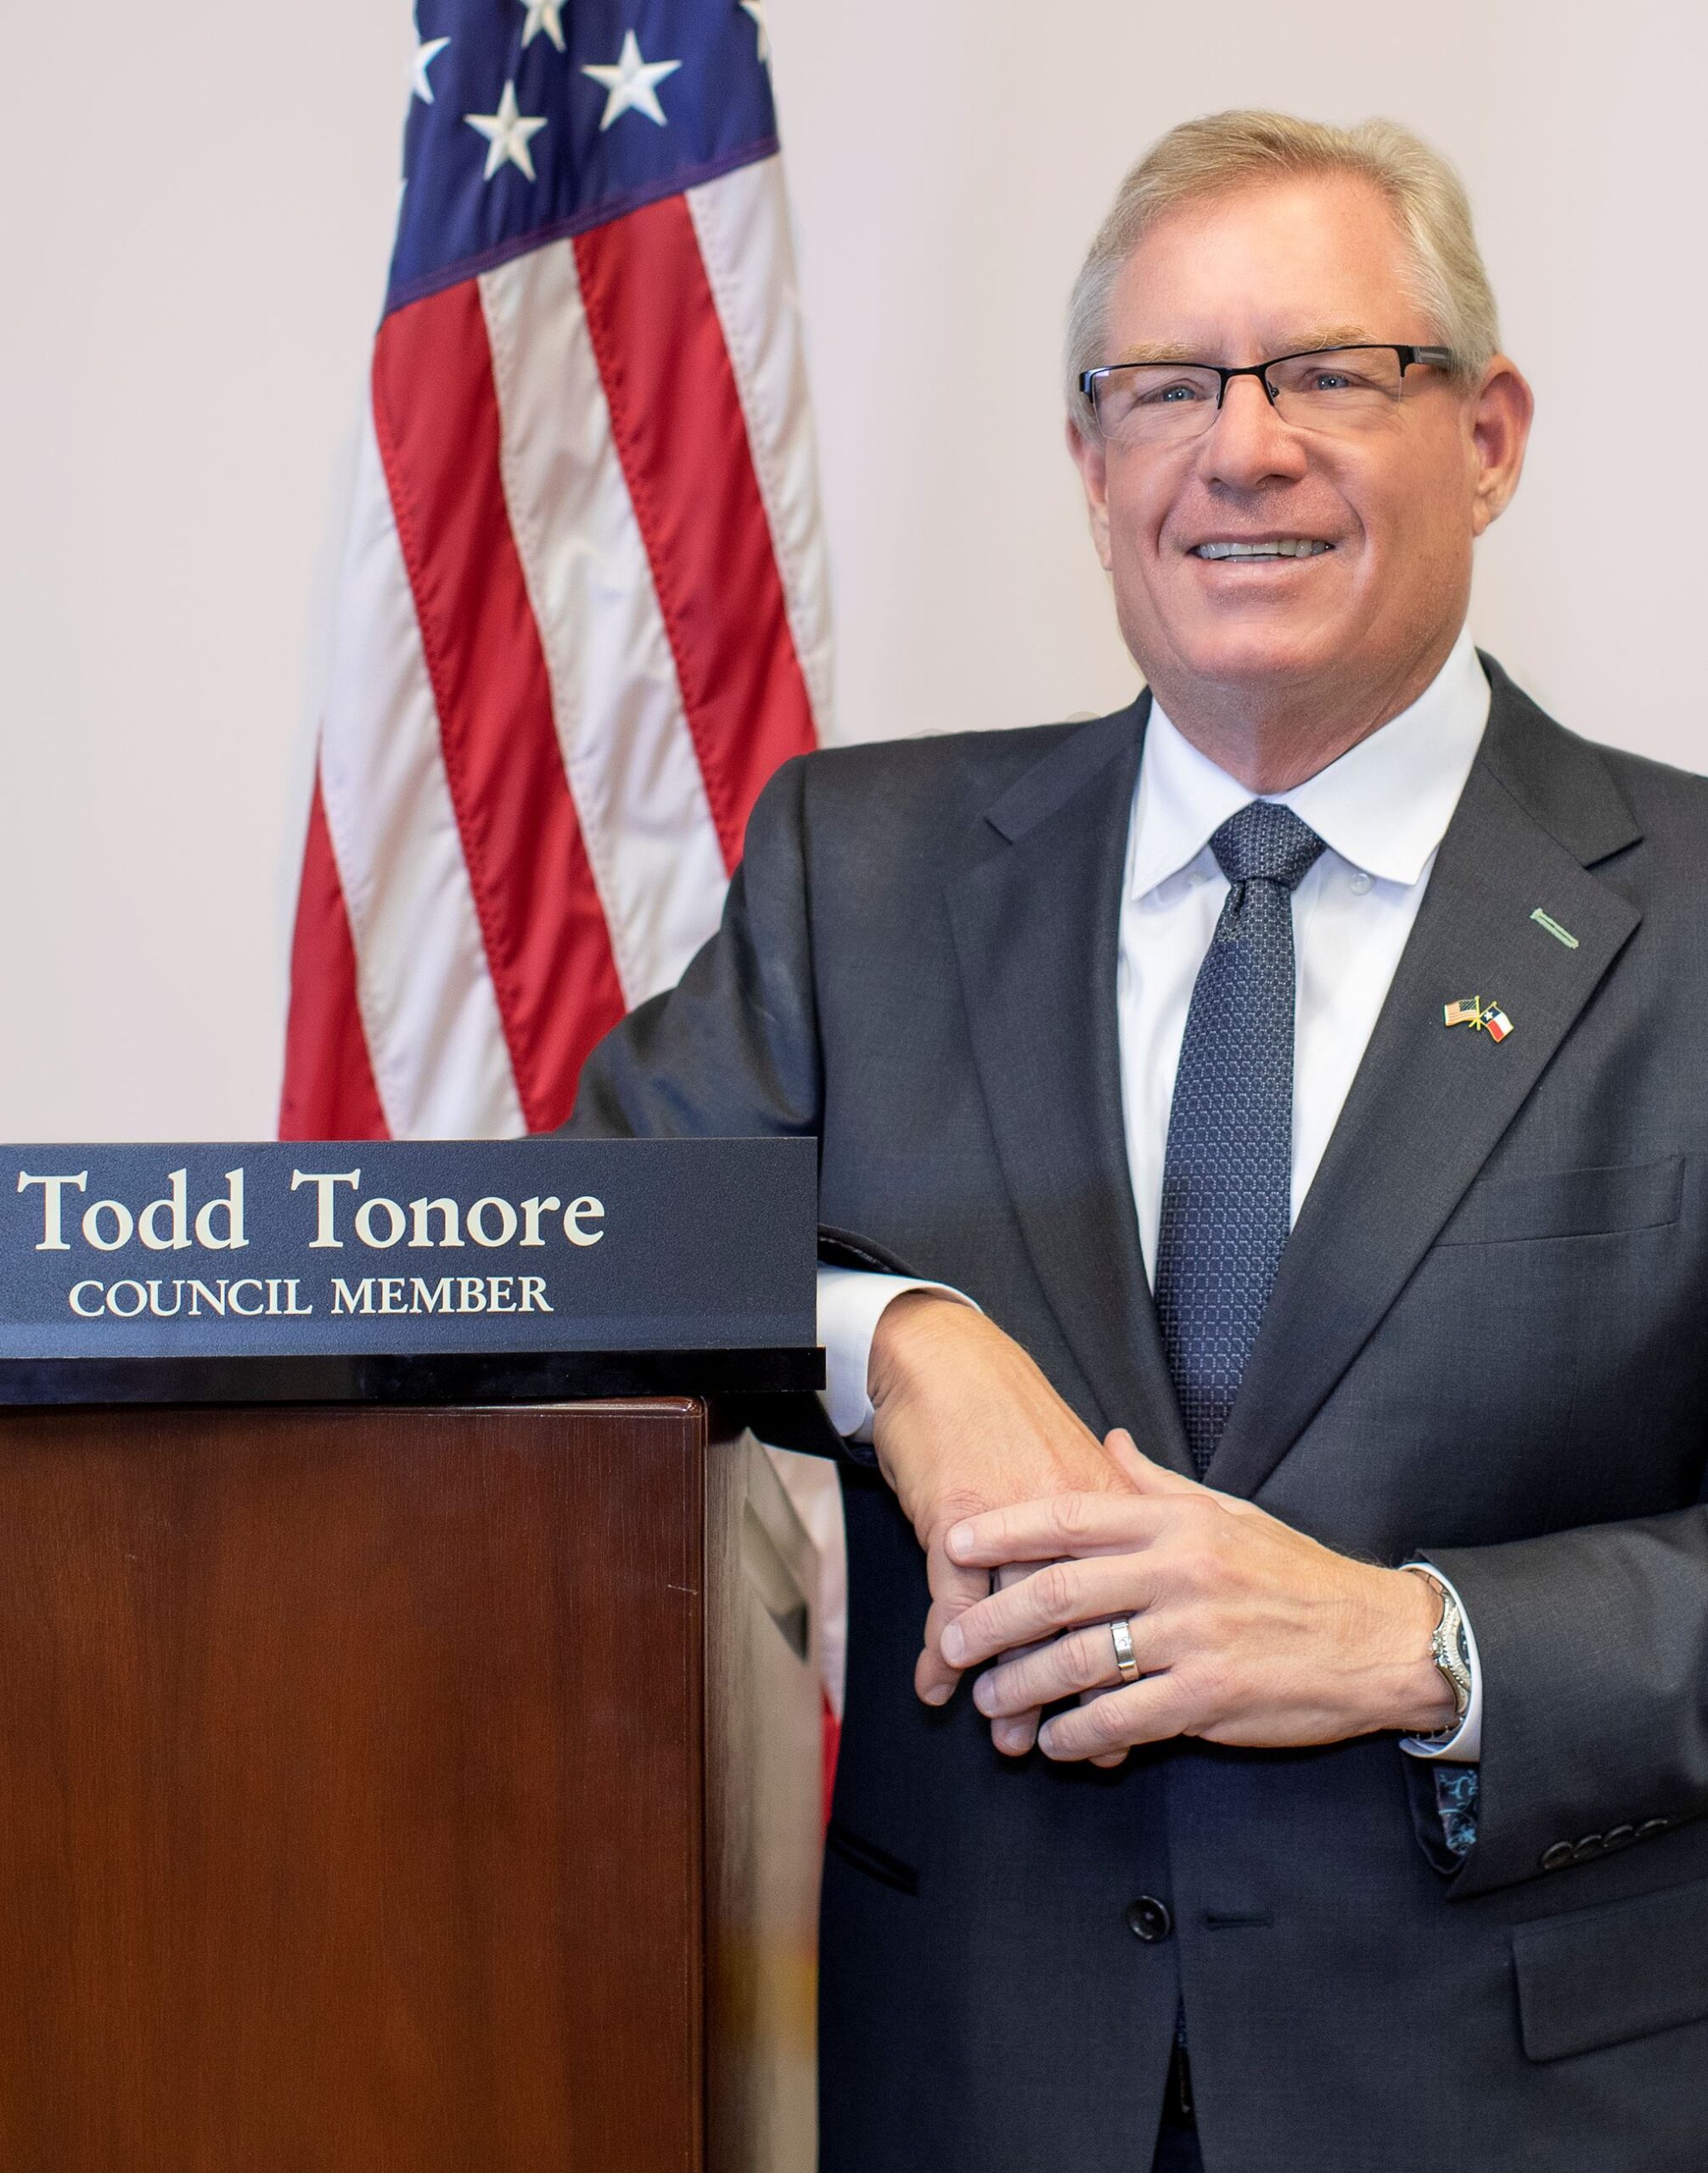 Todd Tonore